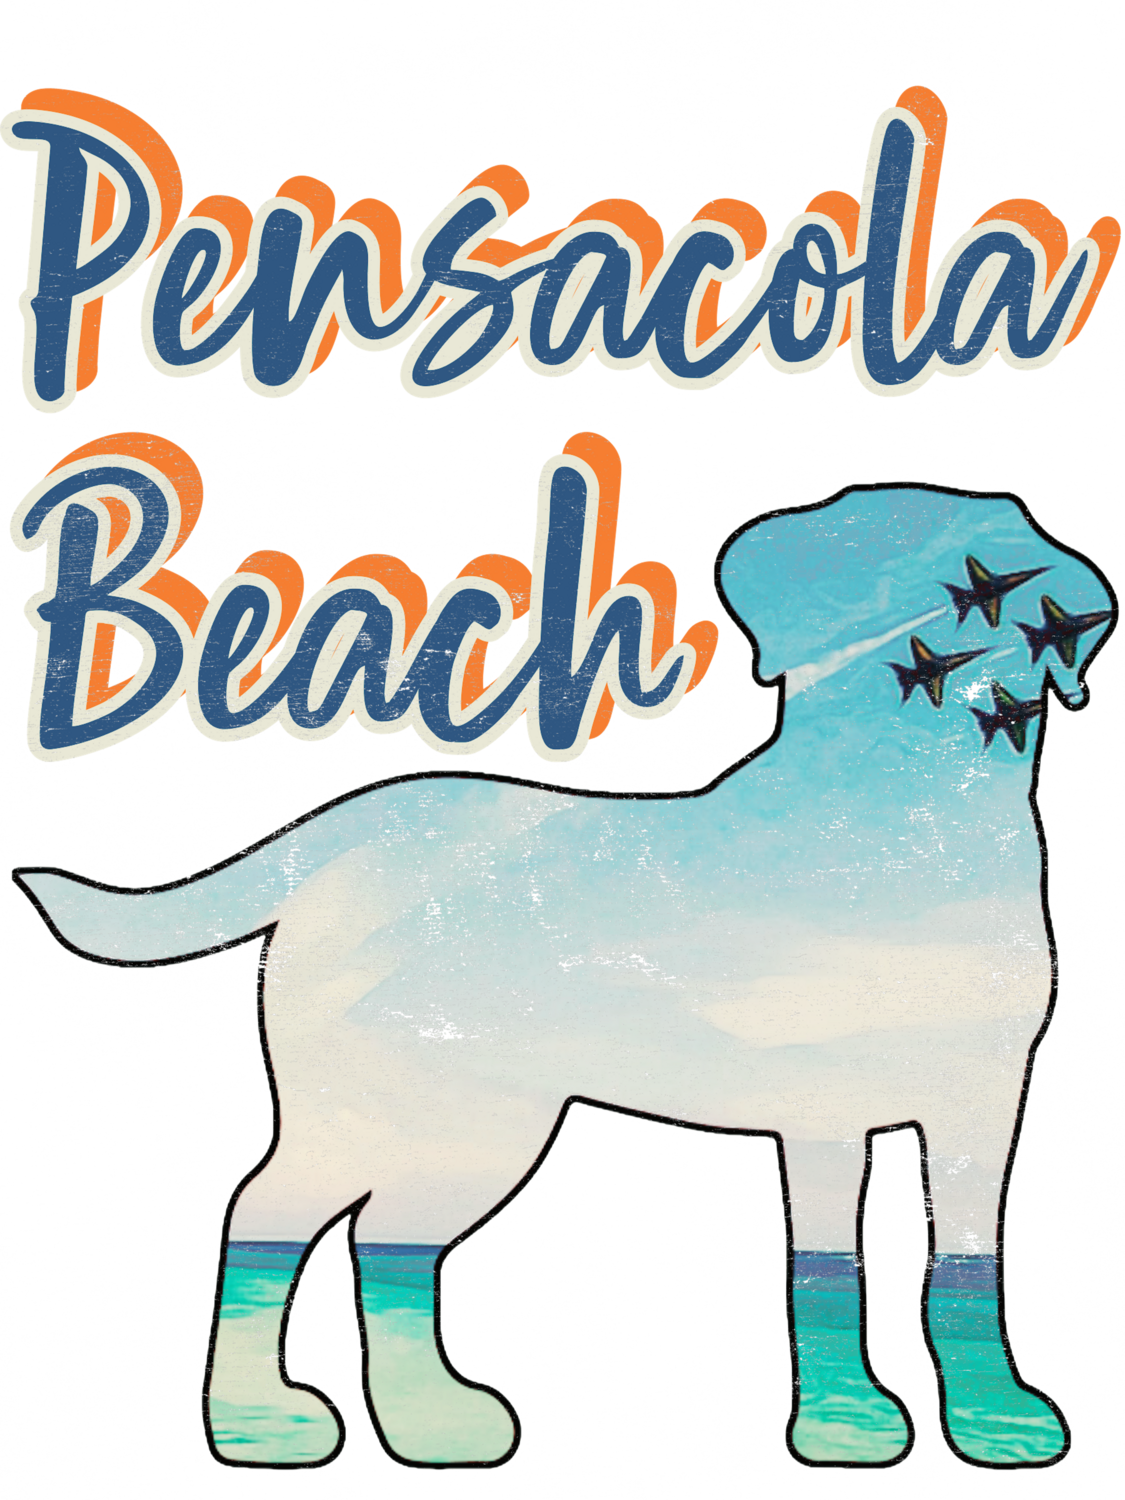 Pensacola Beach Vintage-Look Unisex T